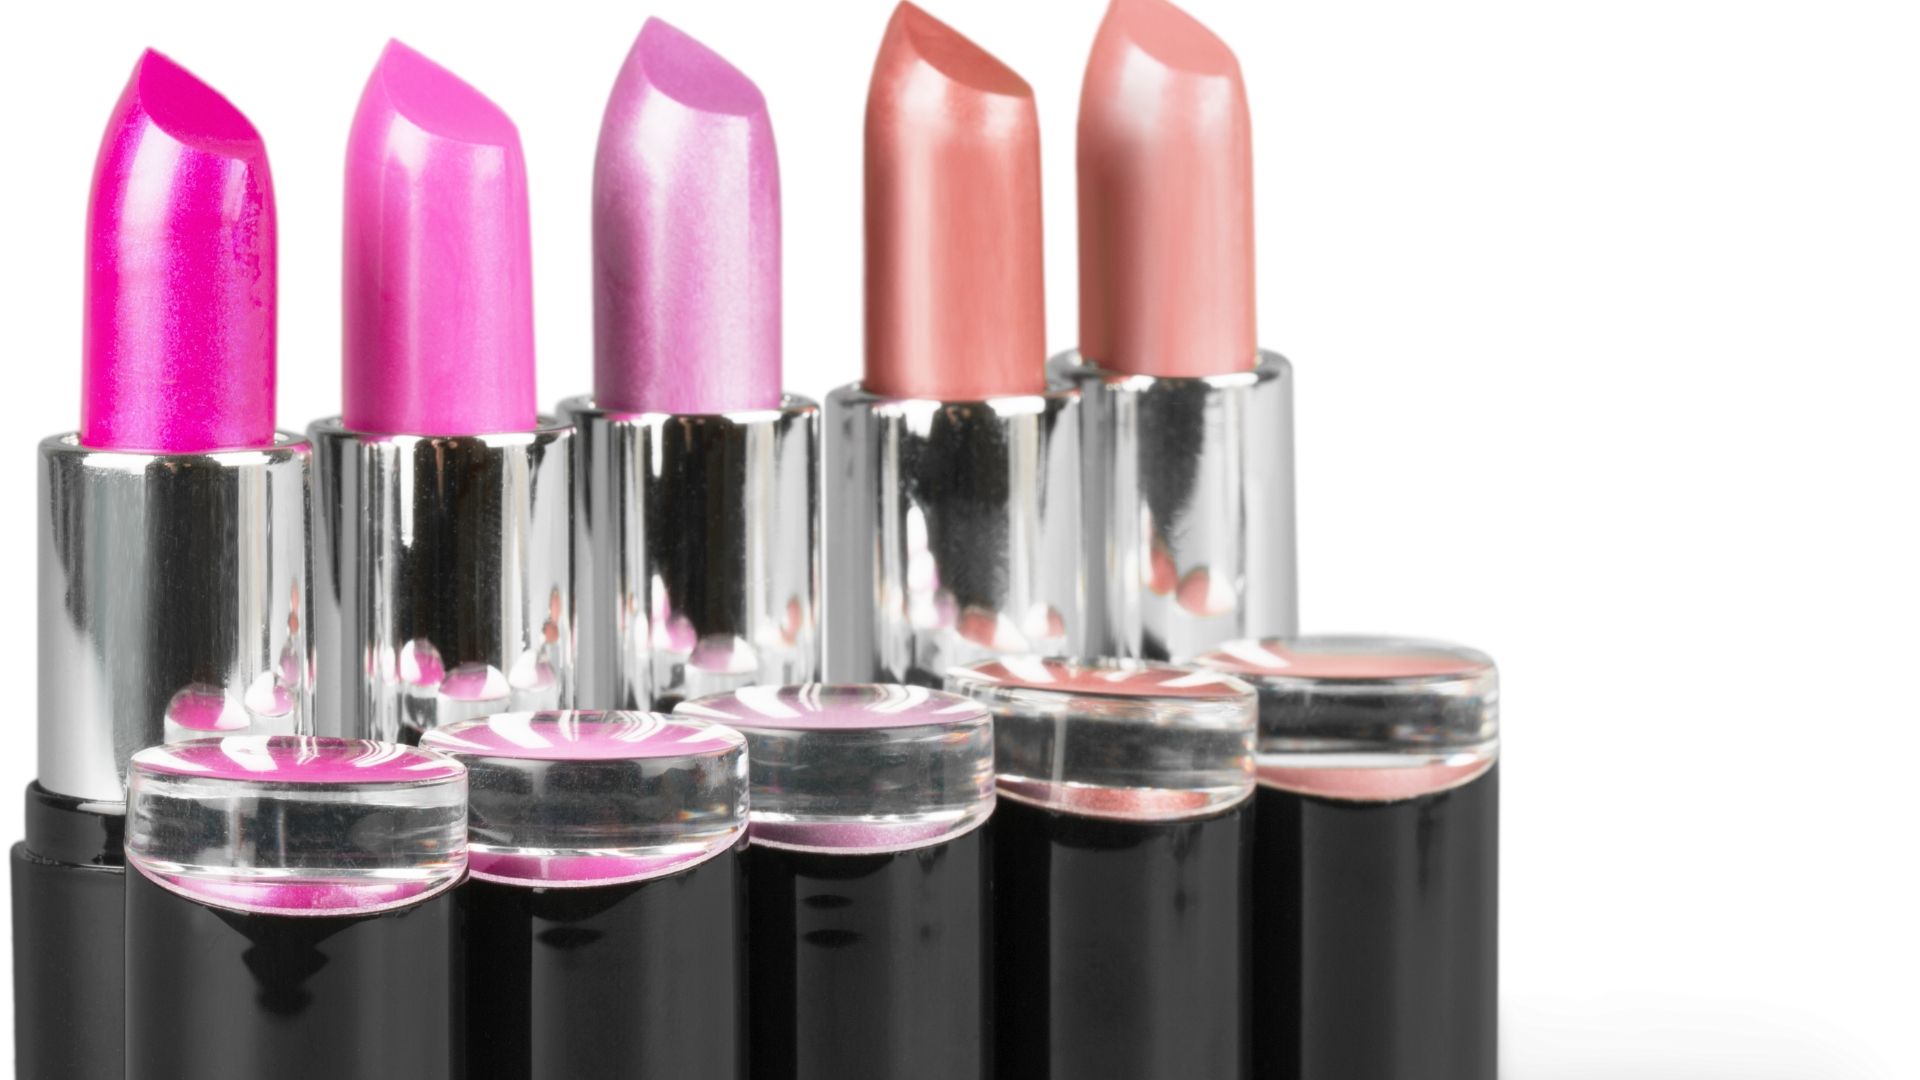 Cosmetic Hamper - Trending Gift Idea for Women